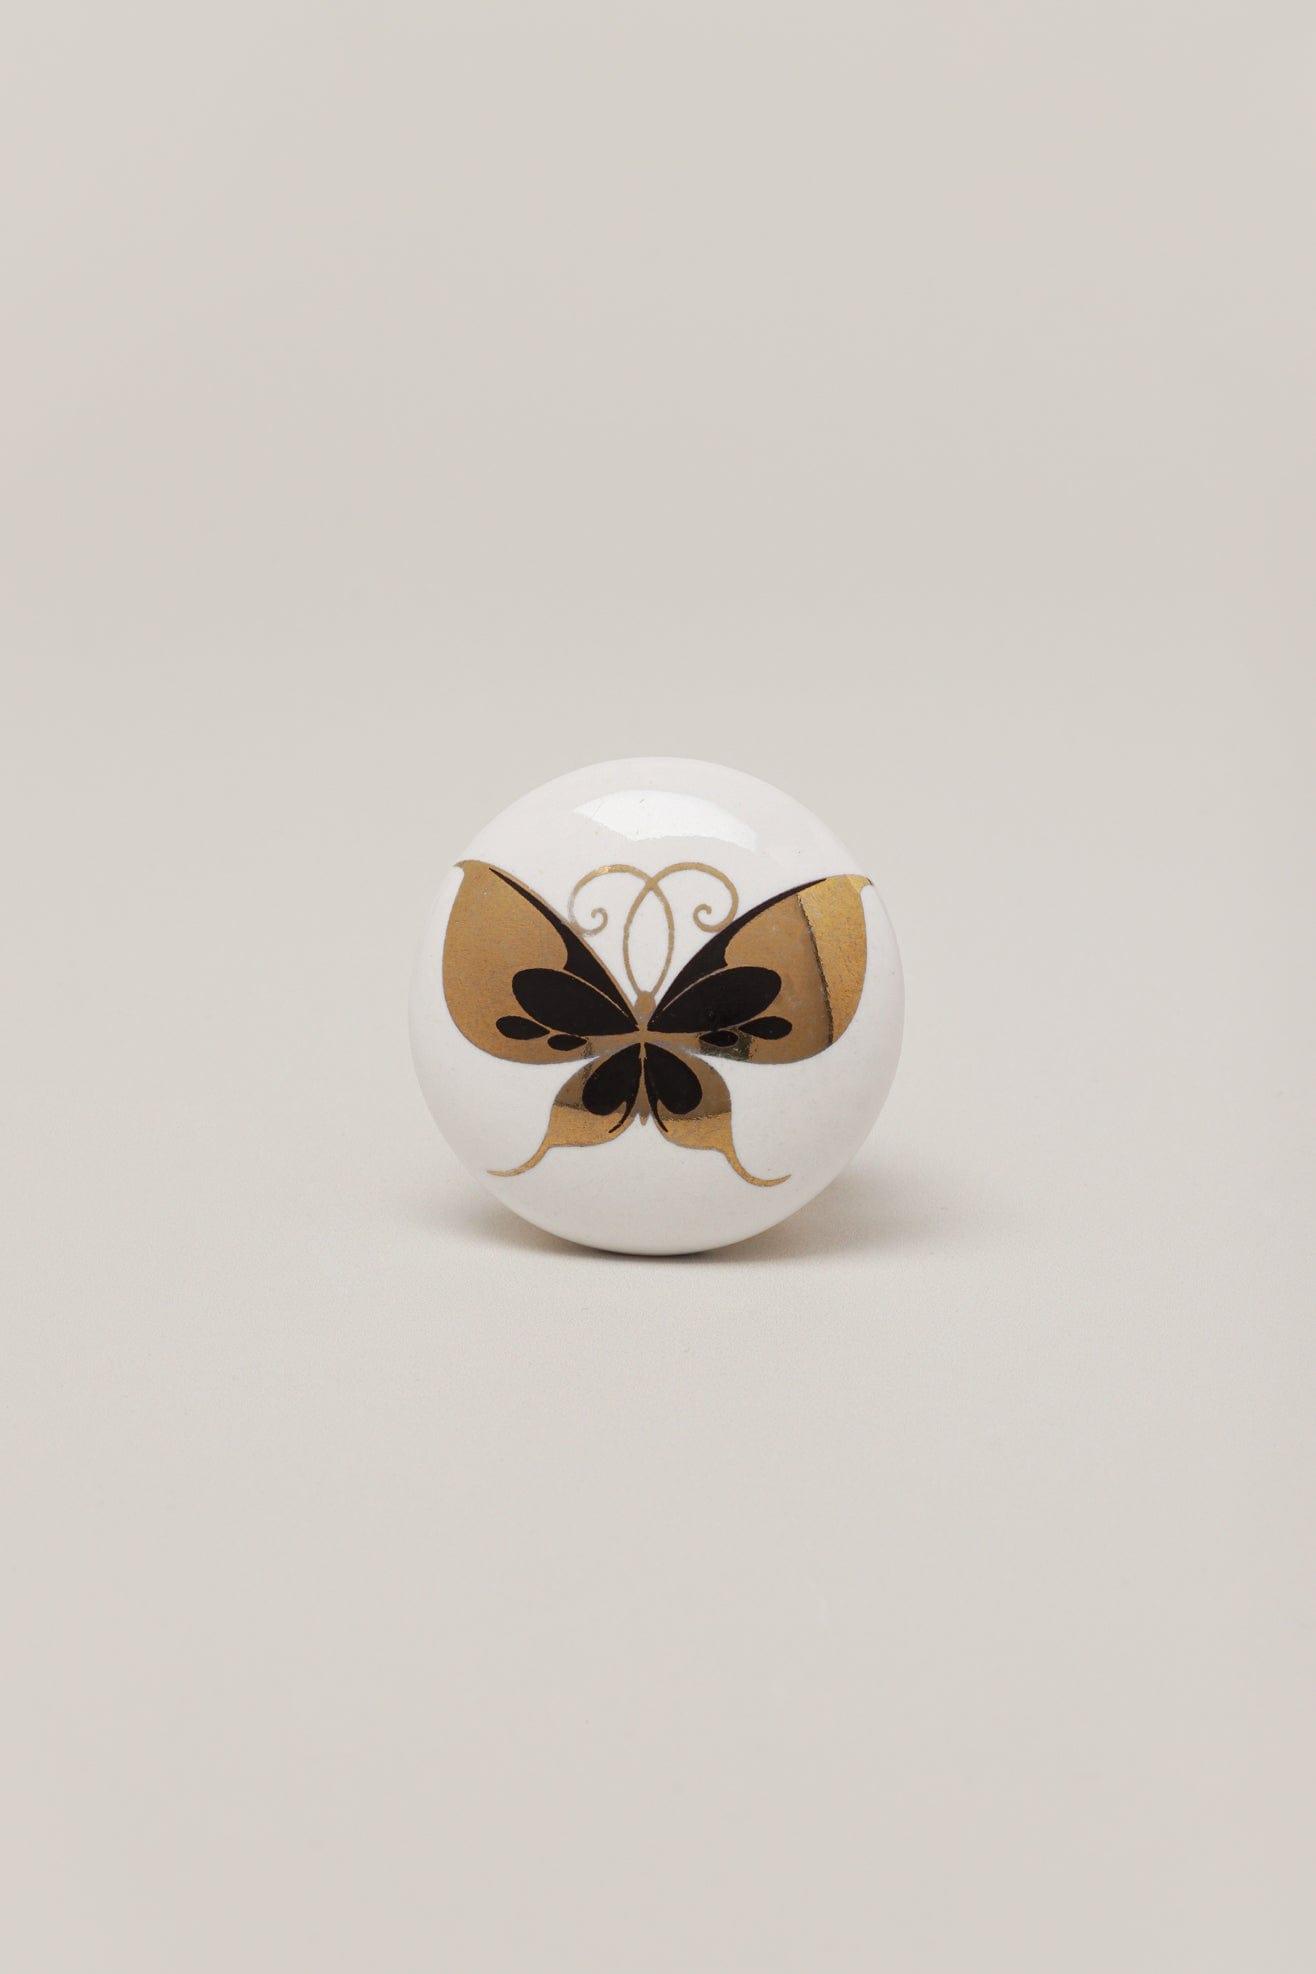 G Decor Cabinet Knobs & Handles Butterfly Design Handmade Ceramic Brass Door Pull Knobs